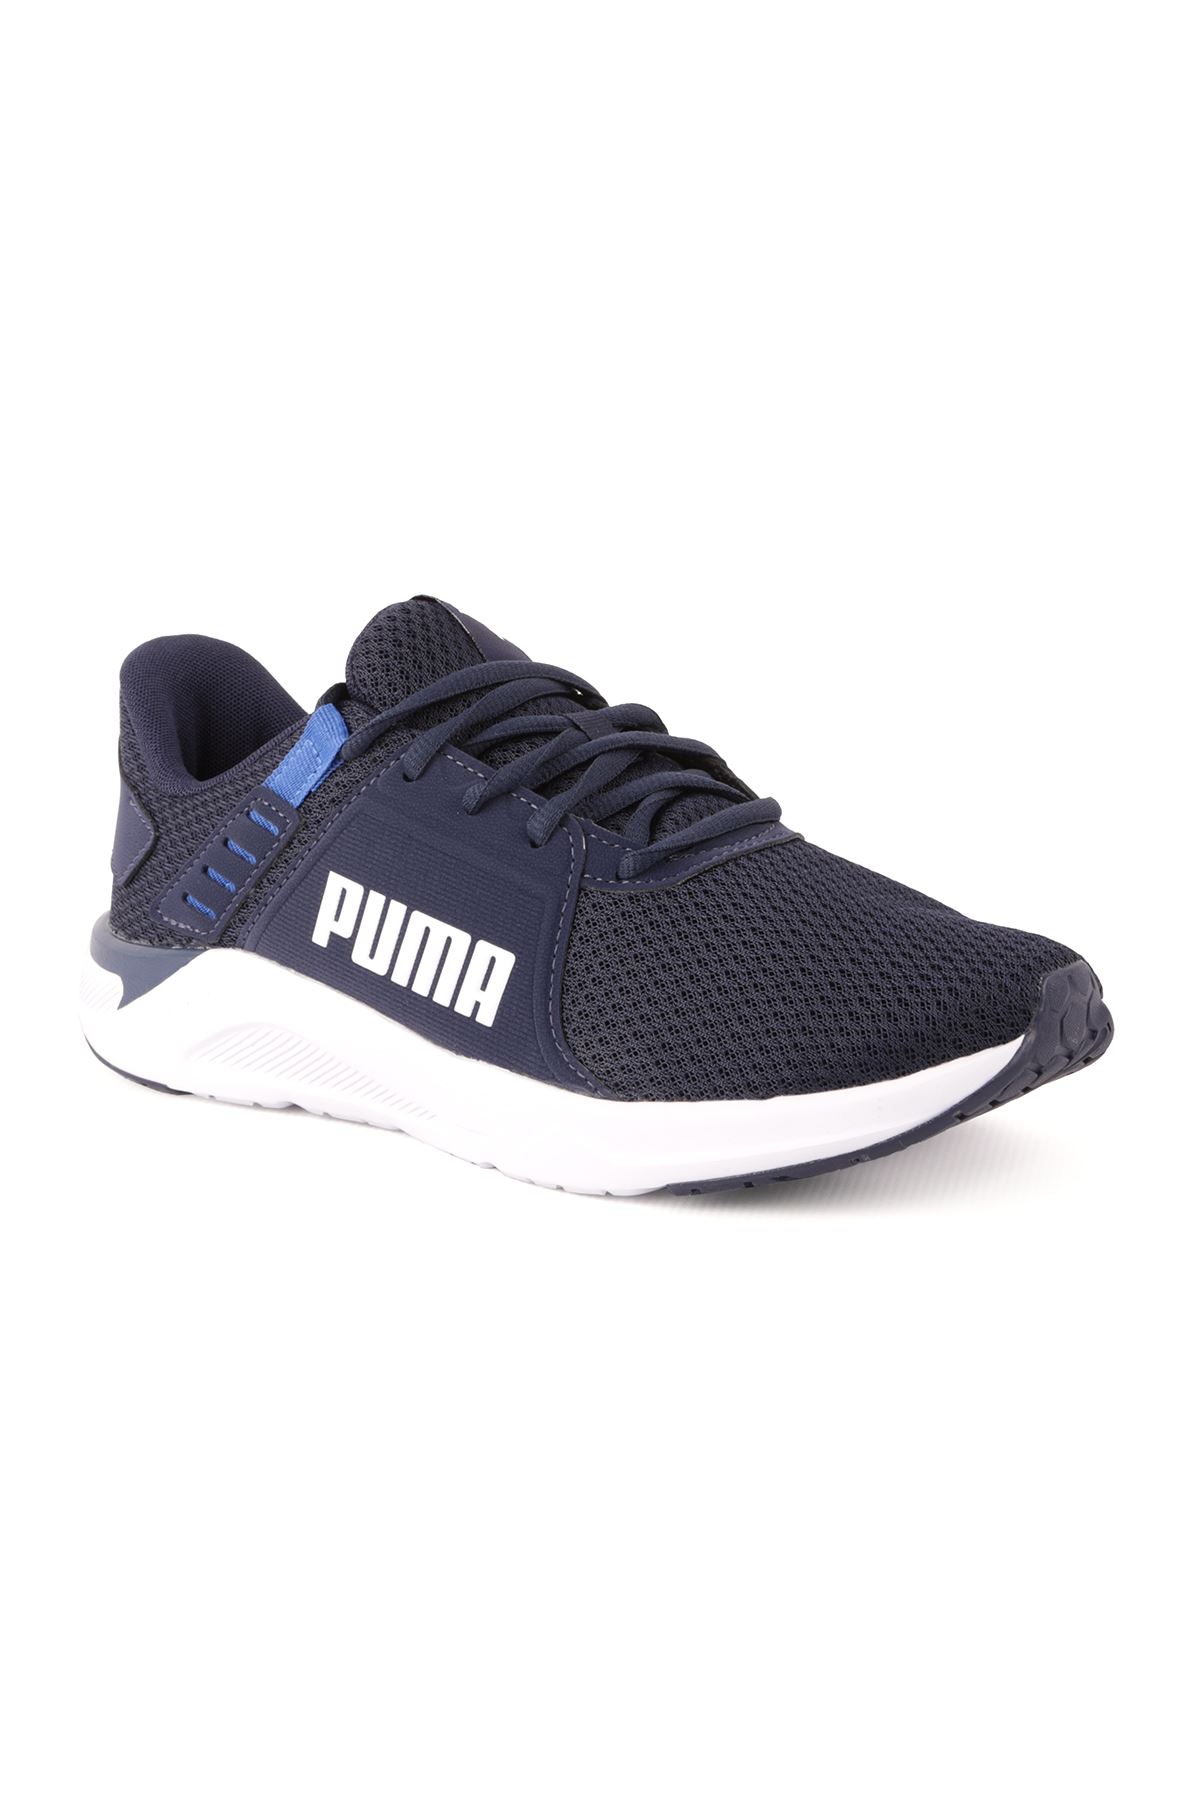 Puma Ftr Connect Spor Ayakkabı 